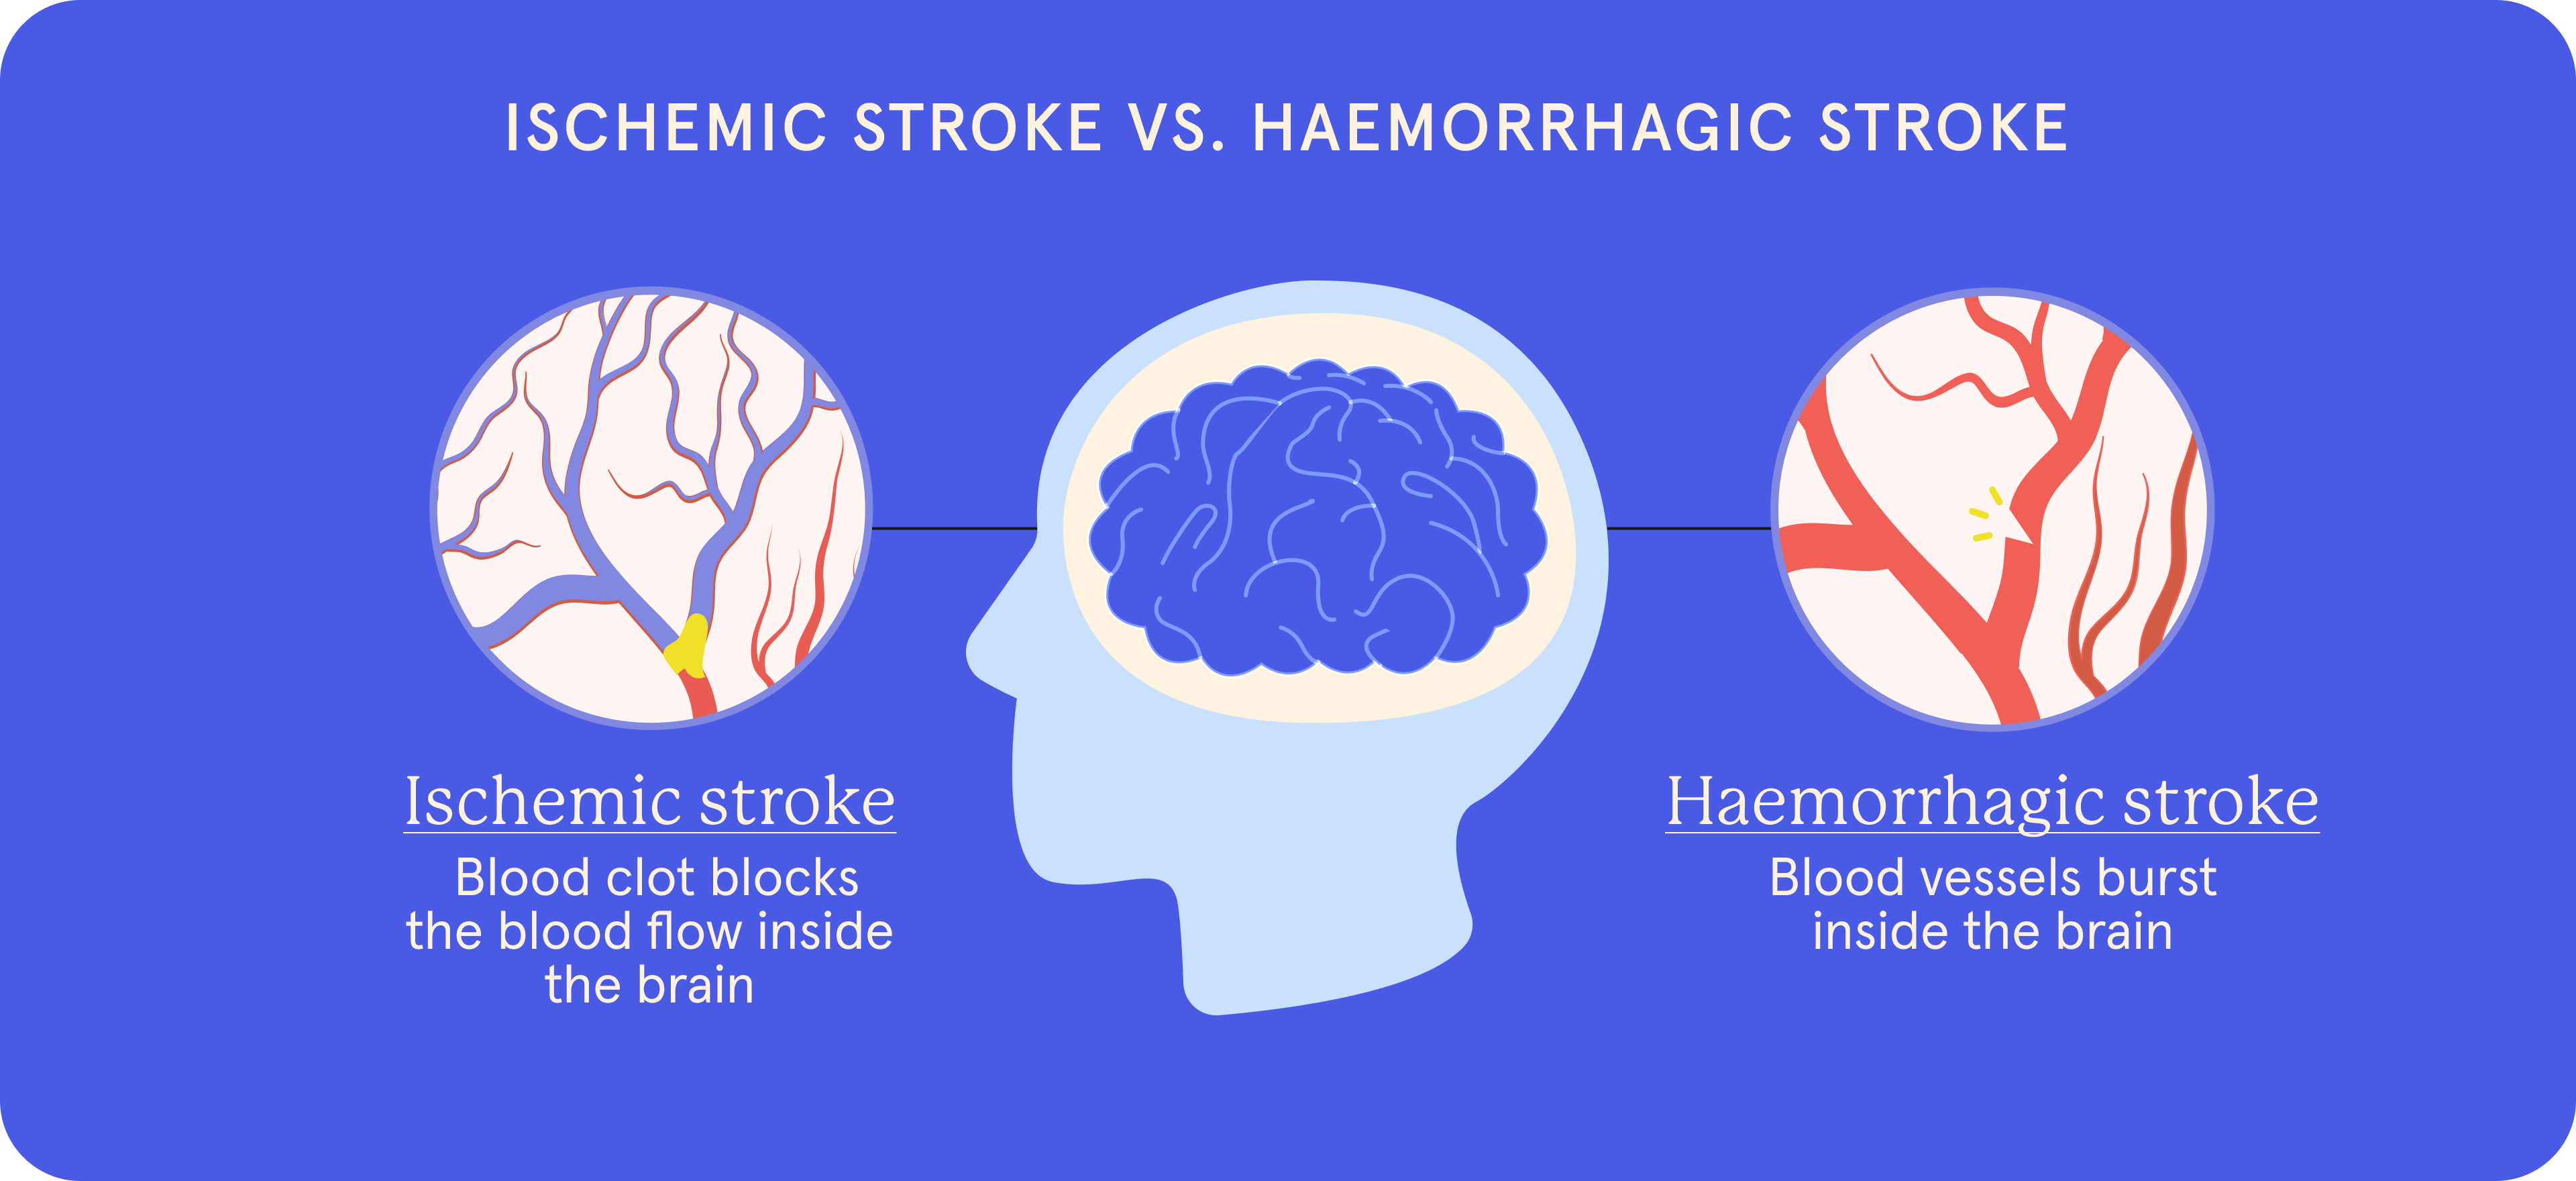 A visual representation of Ischemic stroke vs. Haemorrhagic stroke